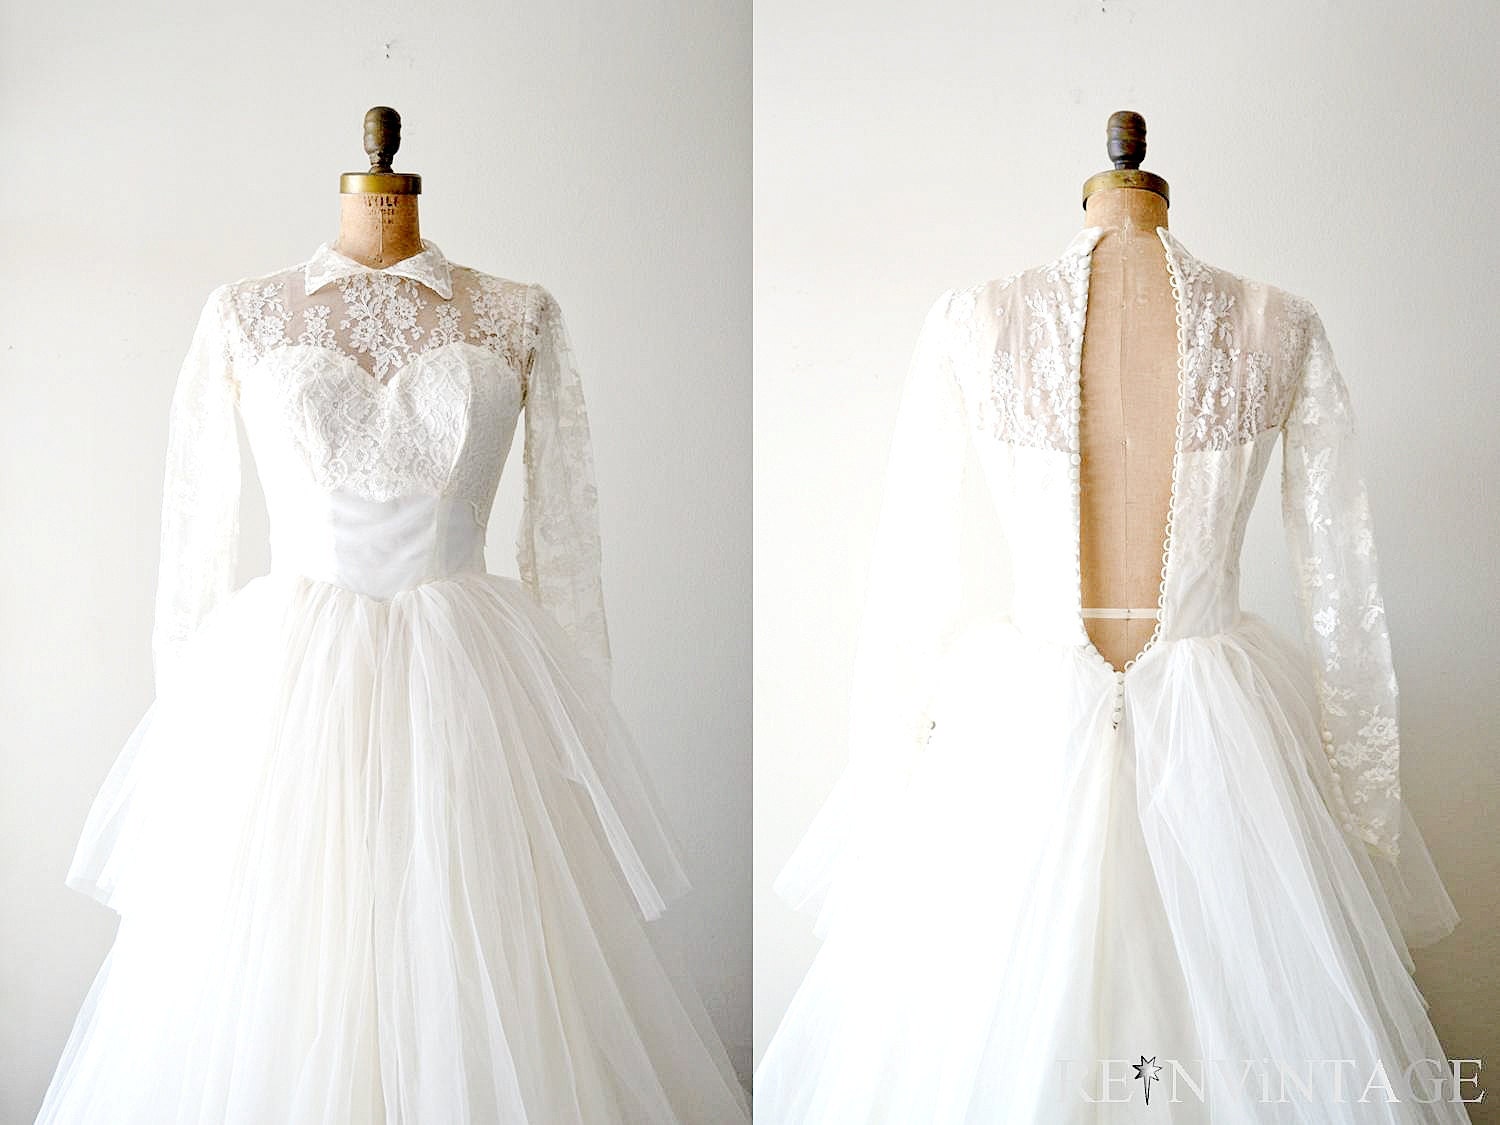 vintage 1940s lace wedding dress : ivory white 40s peplum tulle full skirt wedding dress